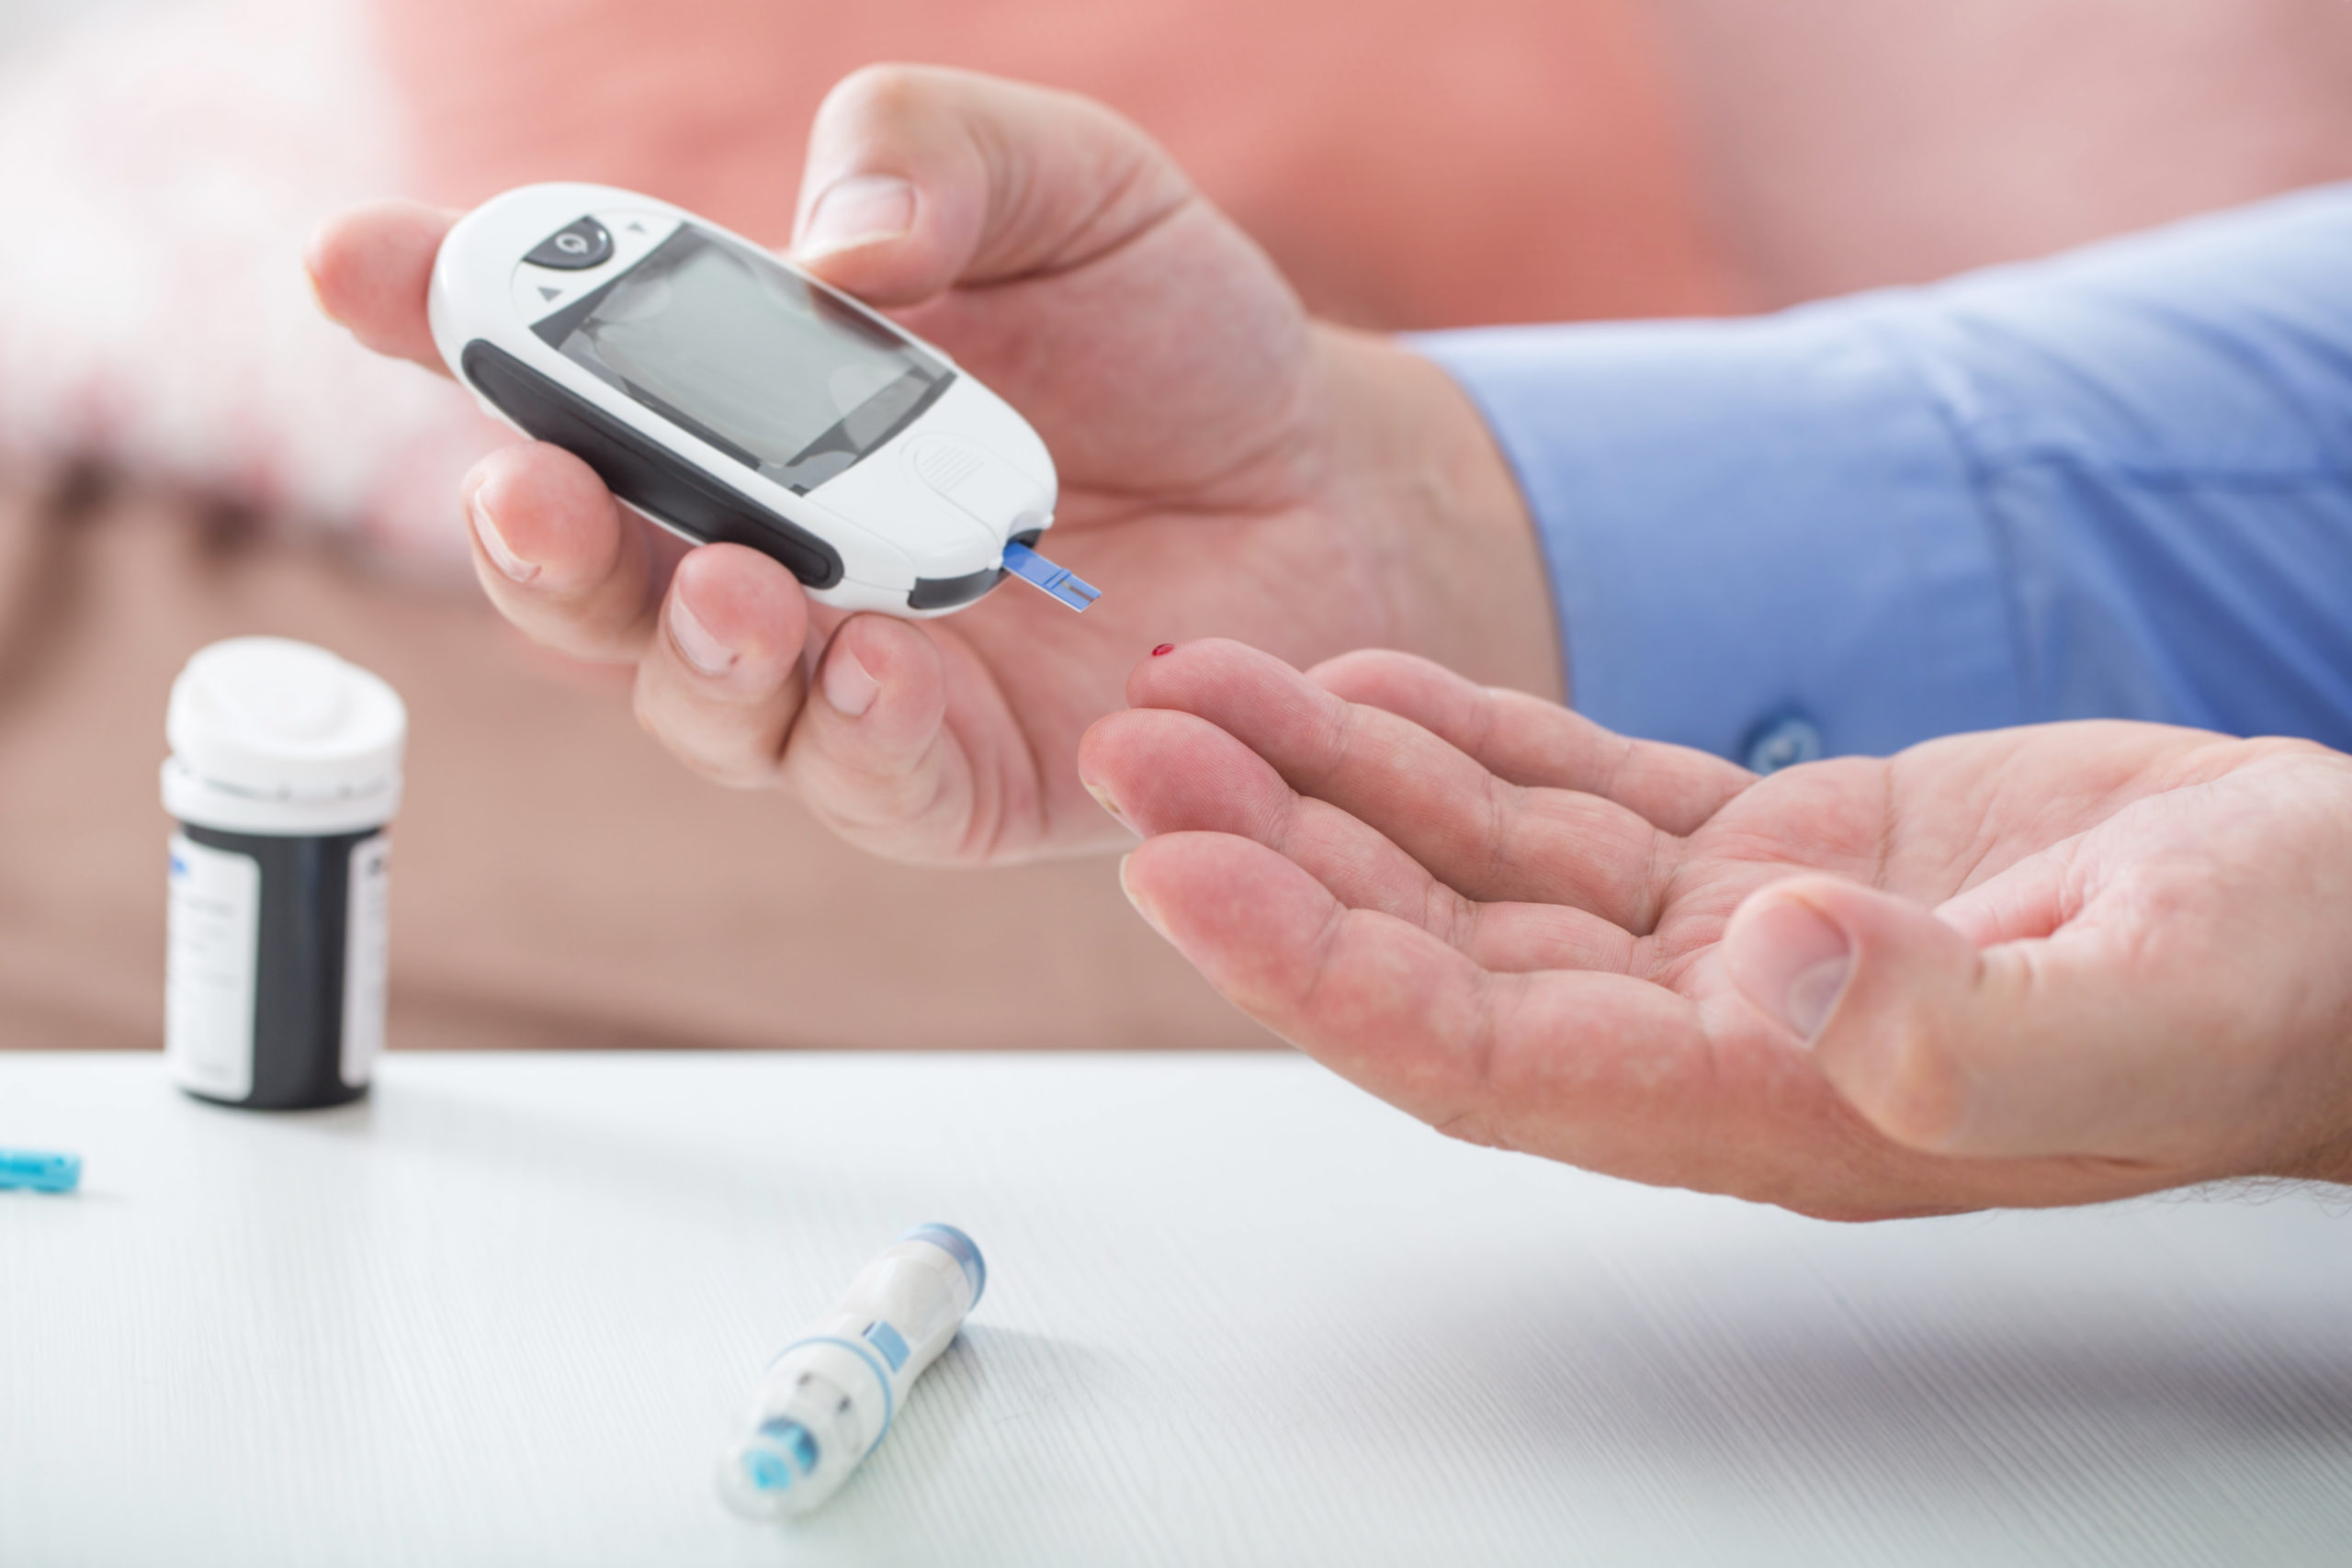 Does diabetes cause erectile dysfunction?